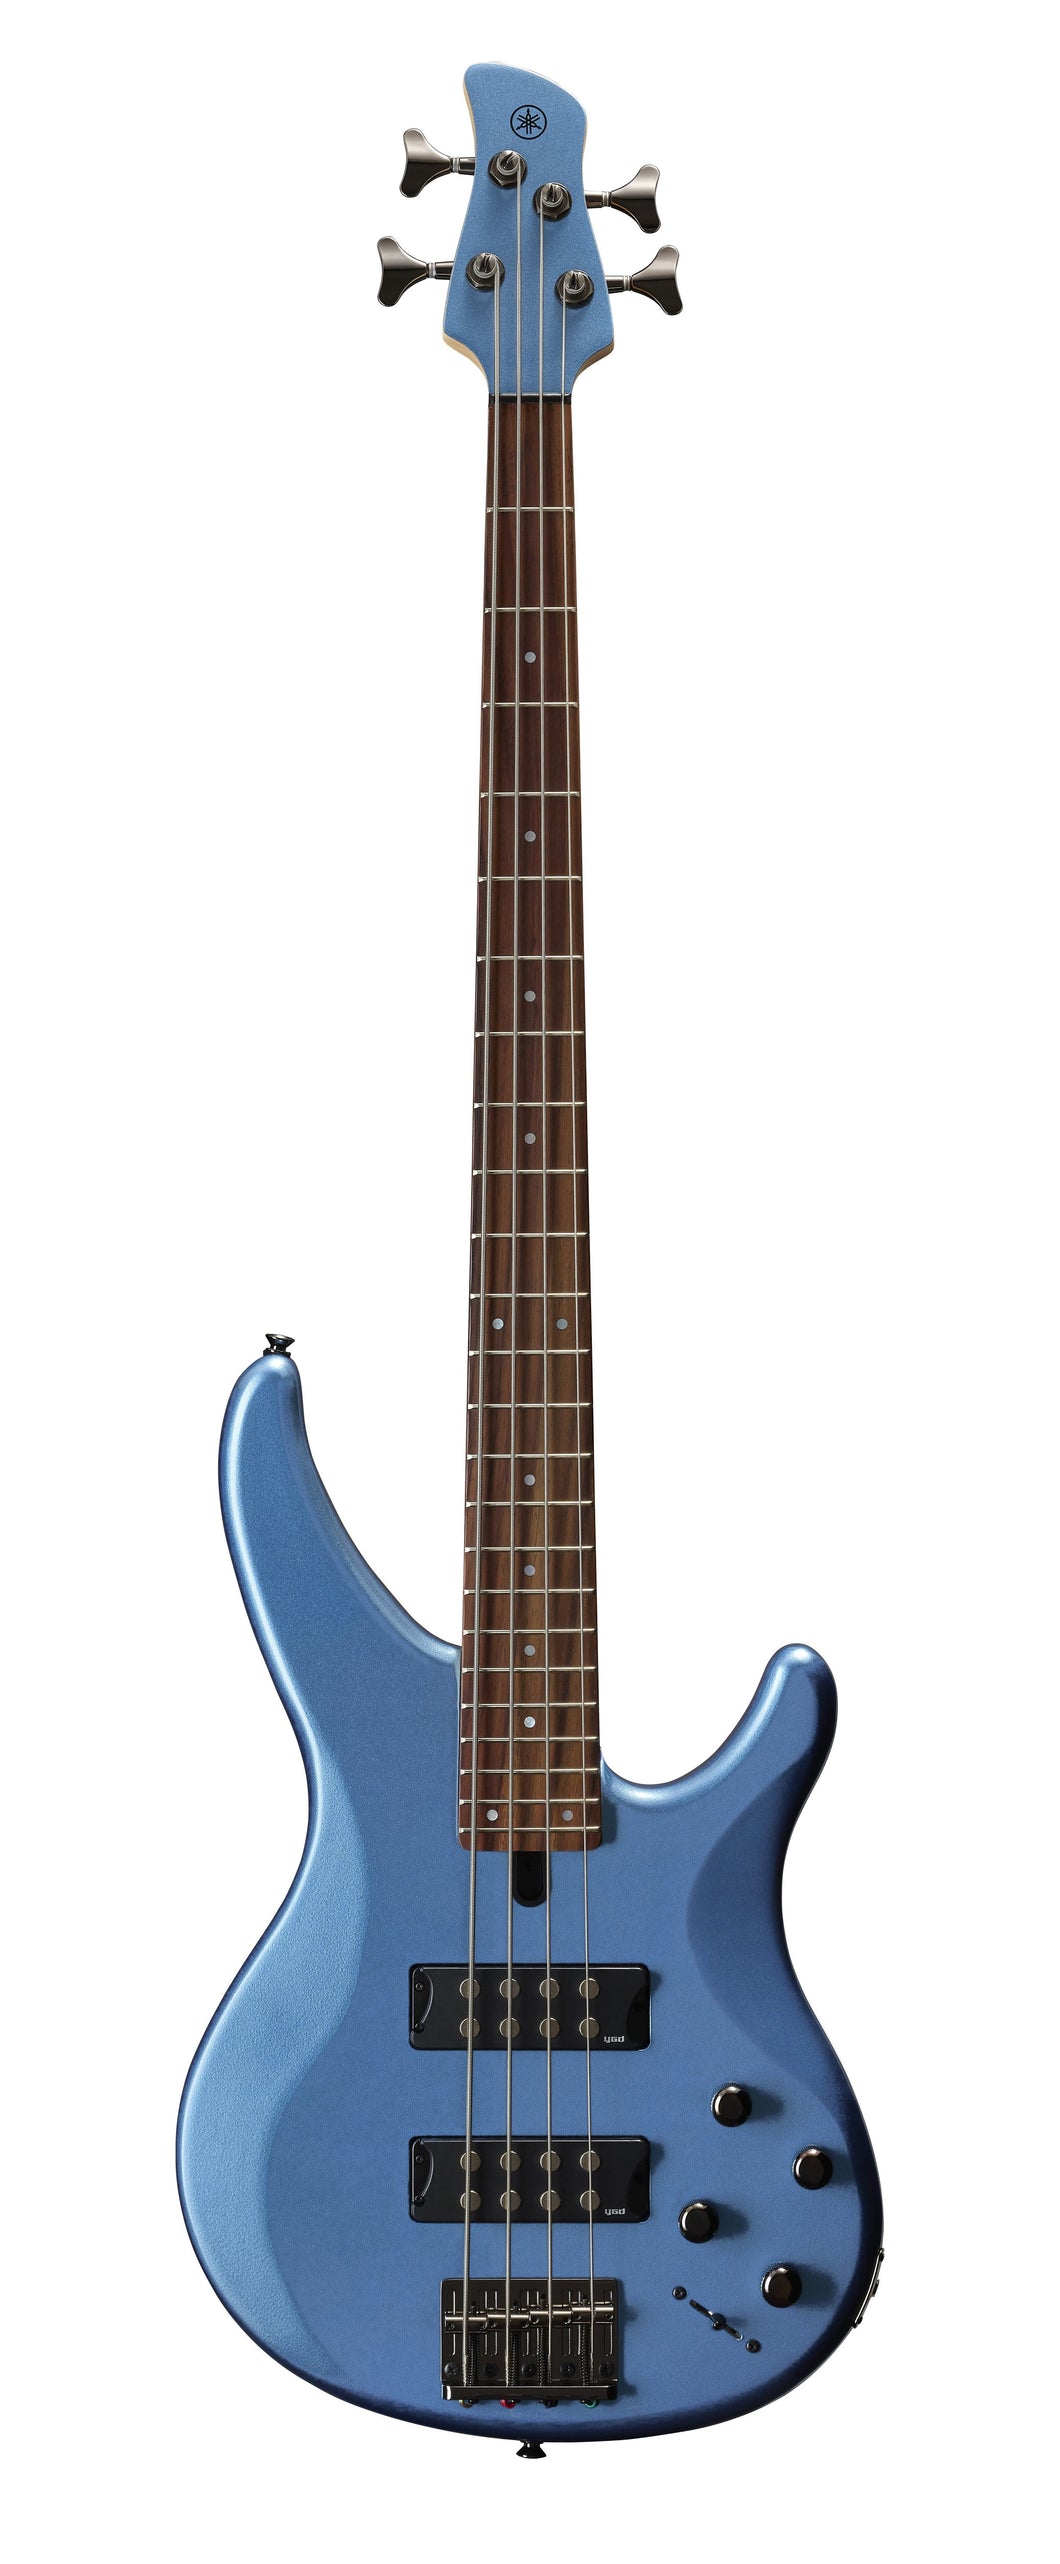 Yamaha TRBX304 Active Bass Guitar Factory Blue finish.